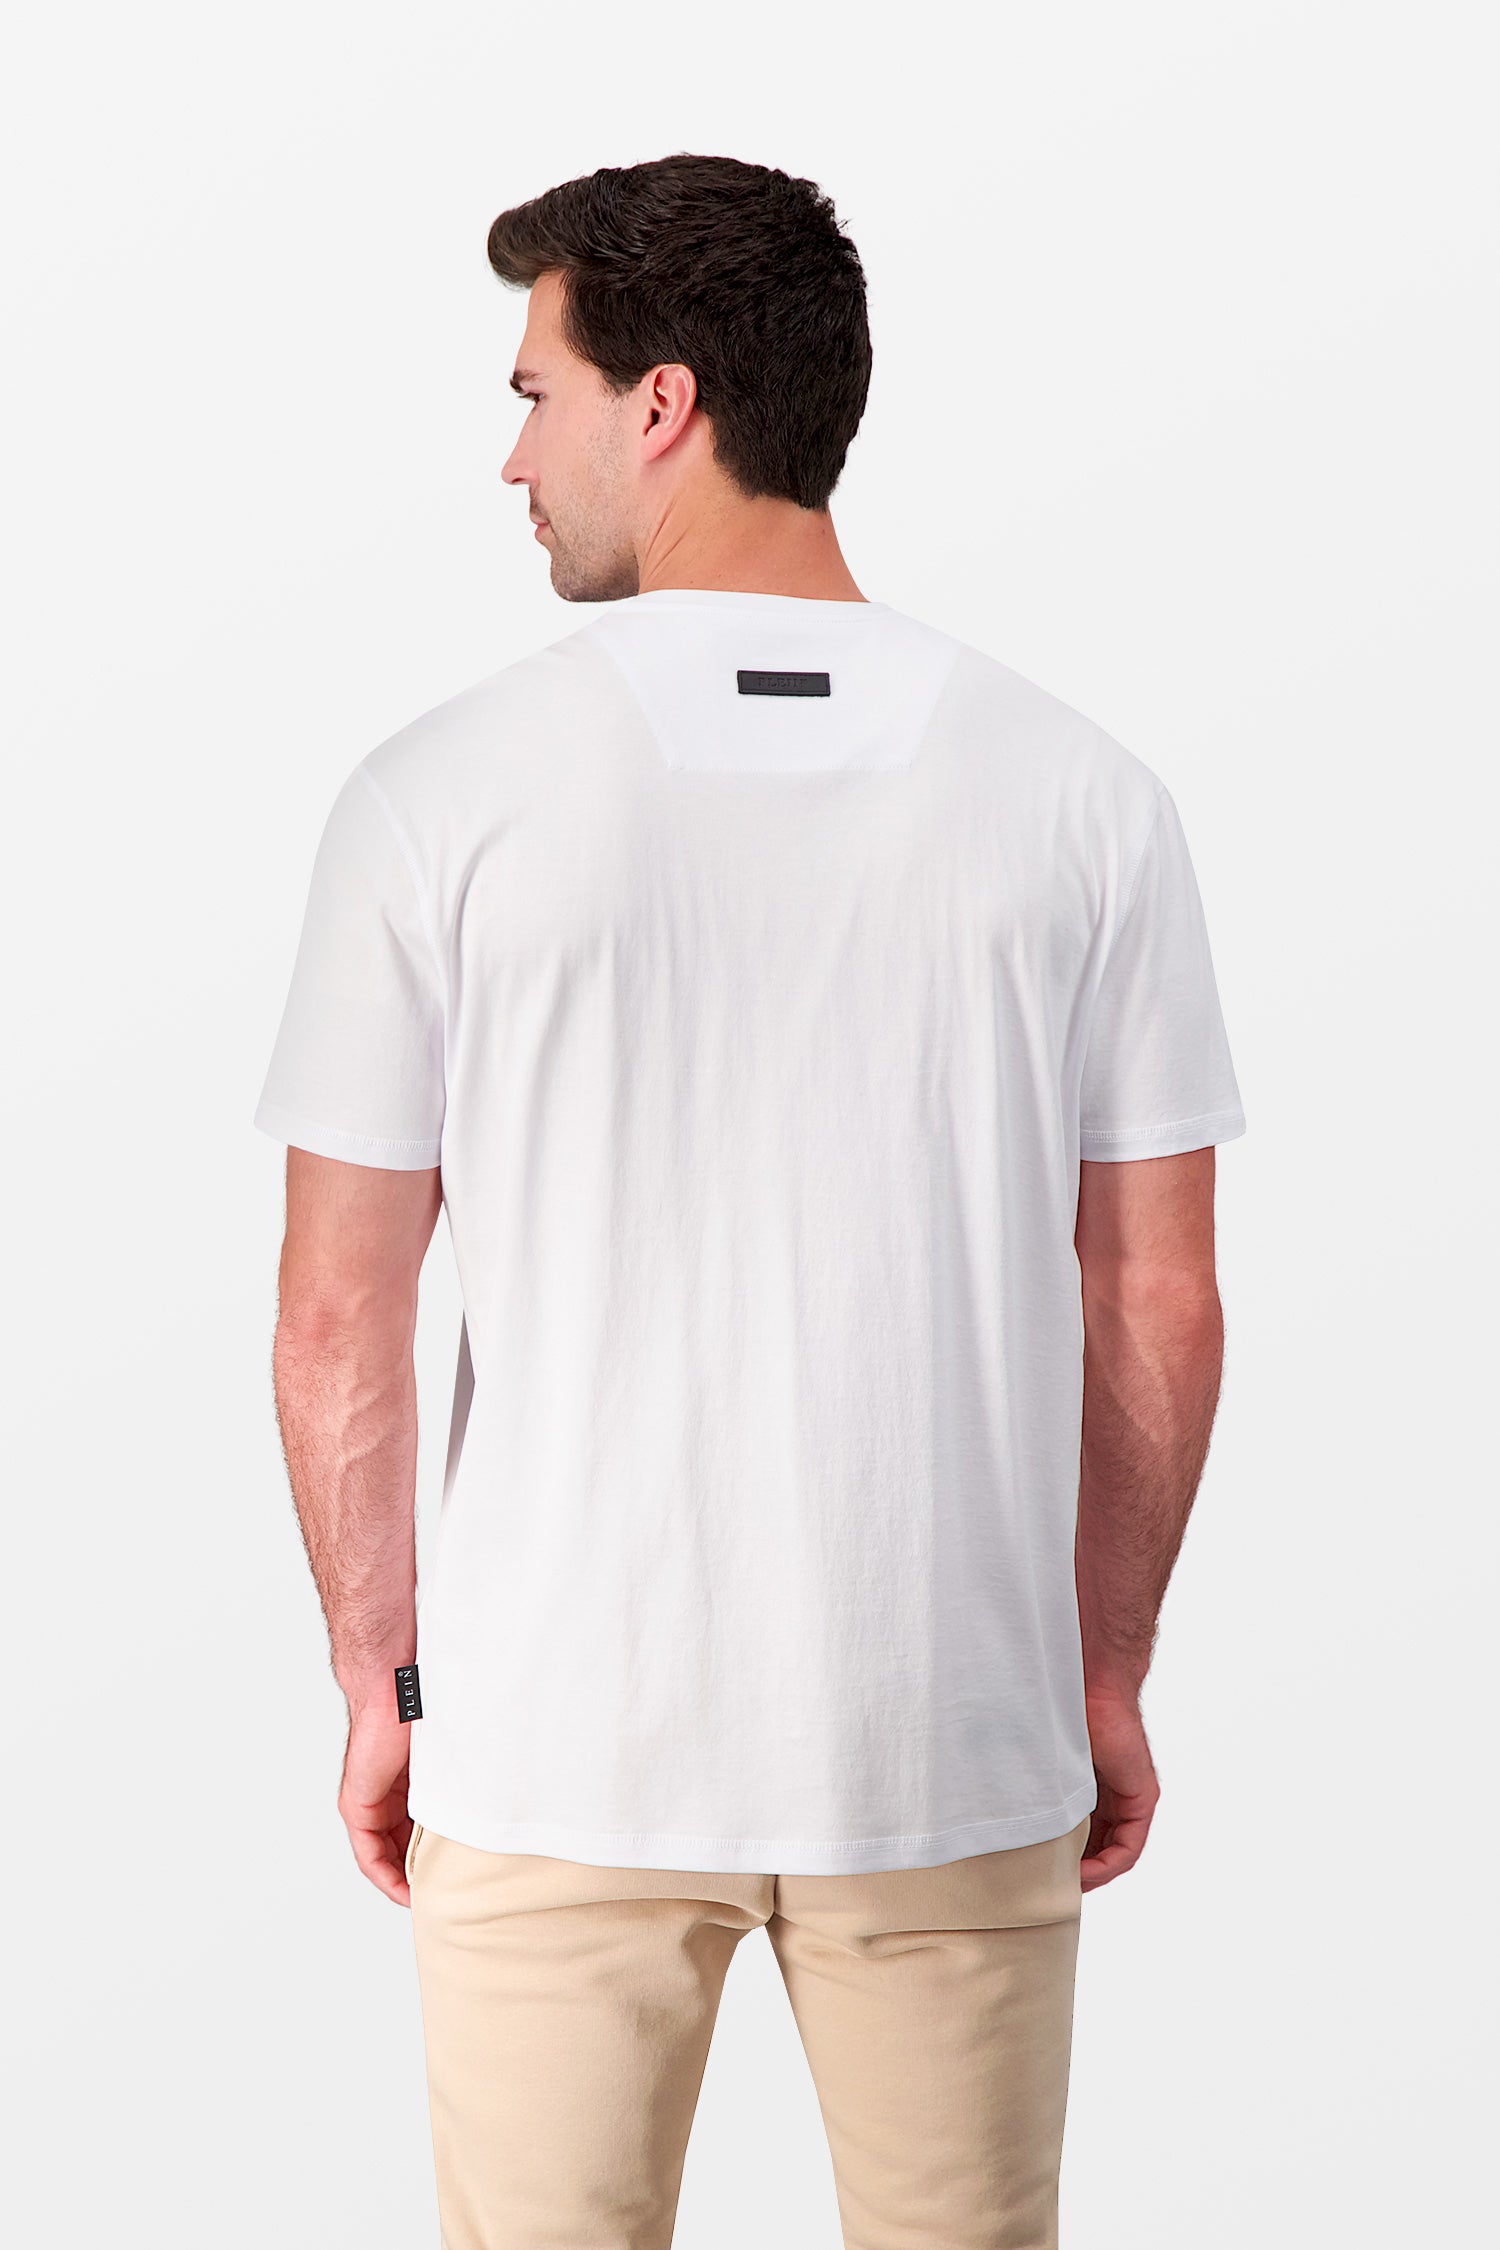 Philipp Plein White Round Neck SS Iconic Plein T-Shirt